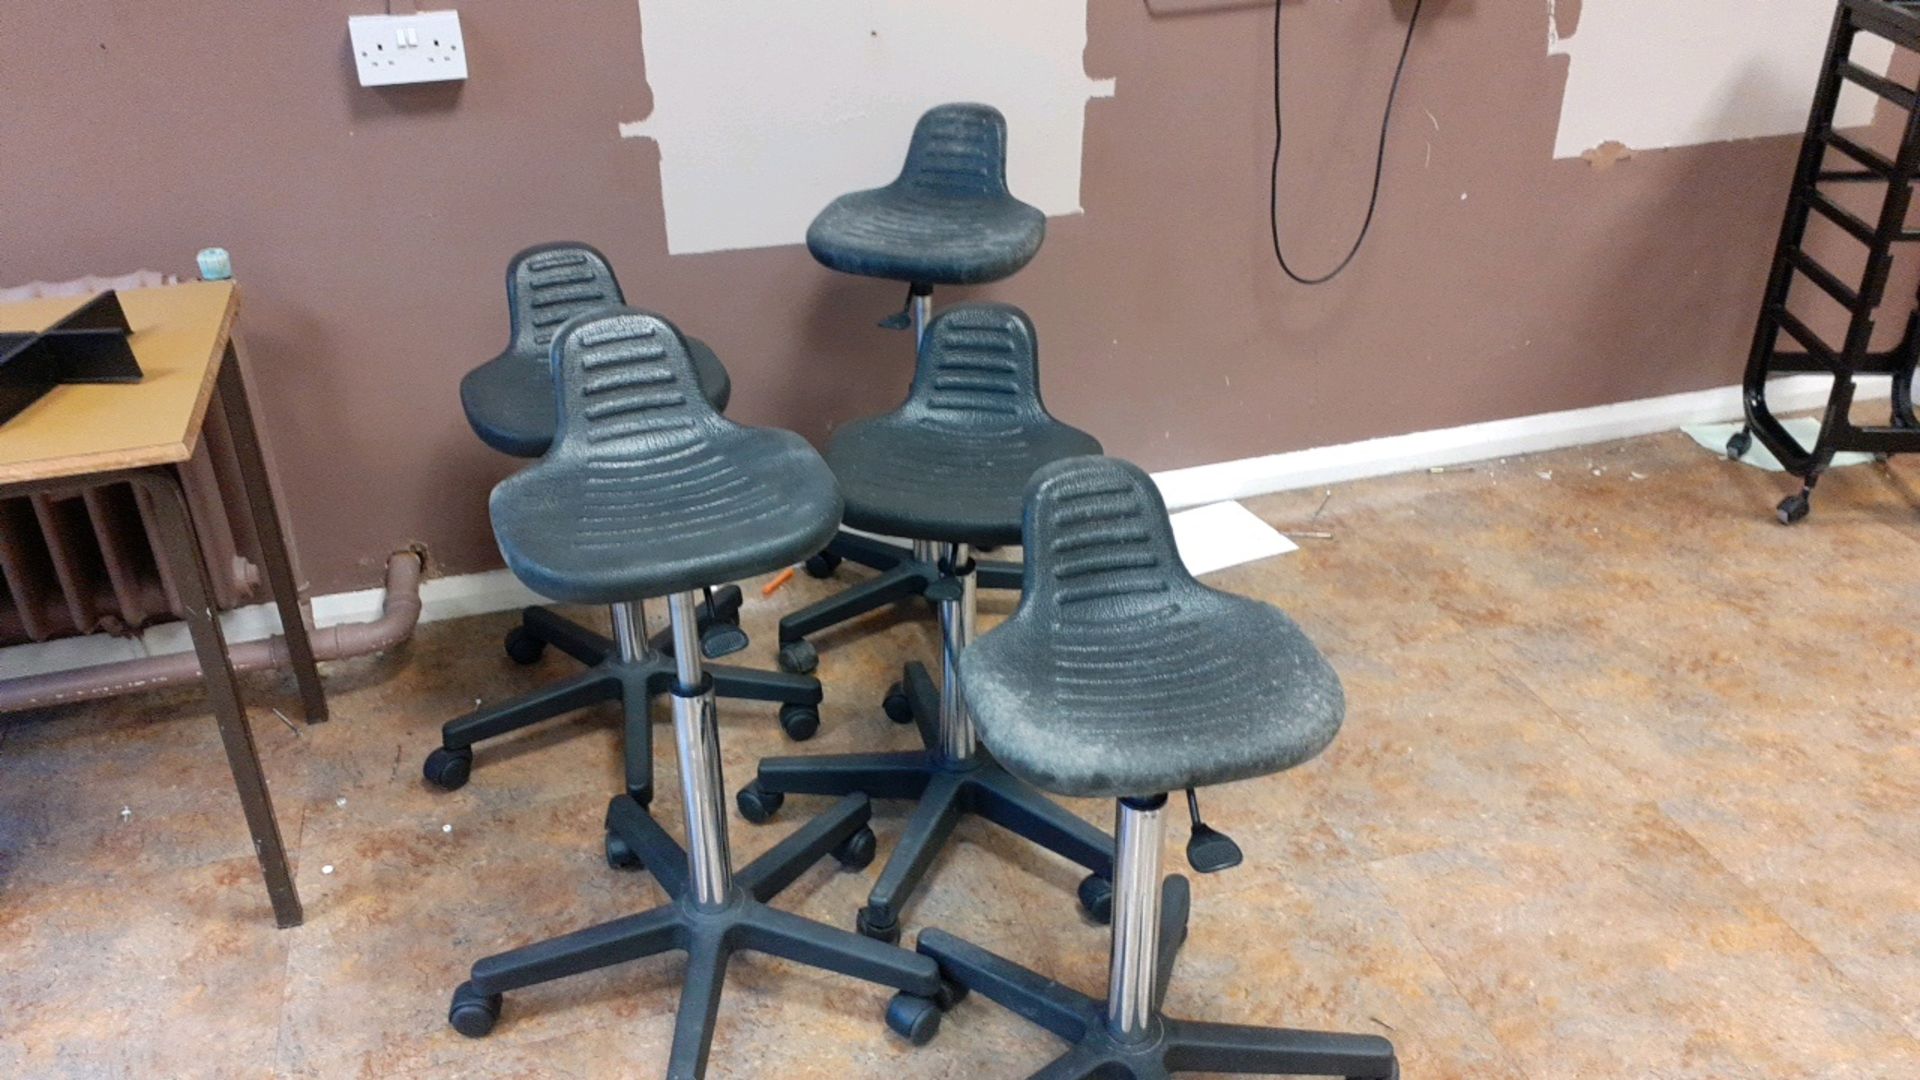 Therapist's stools